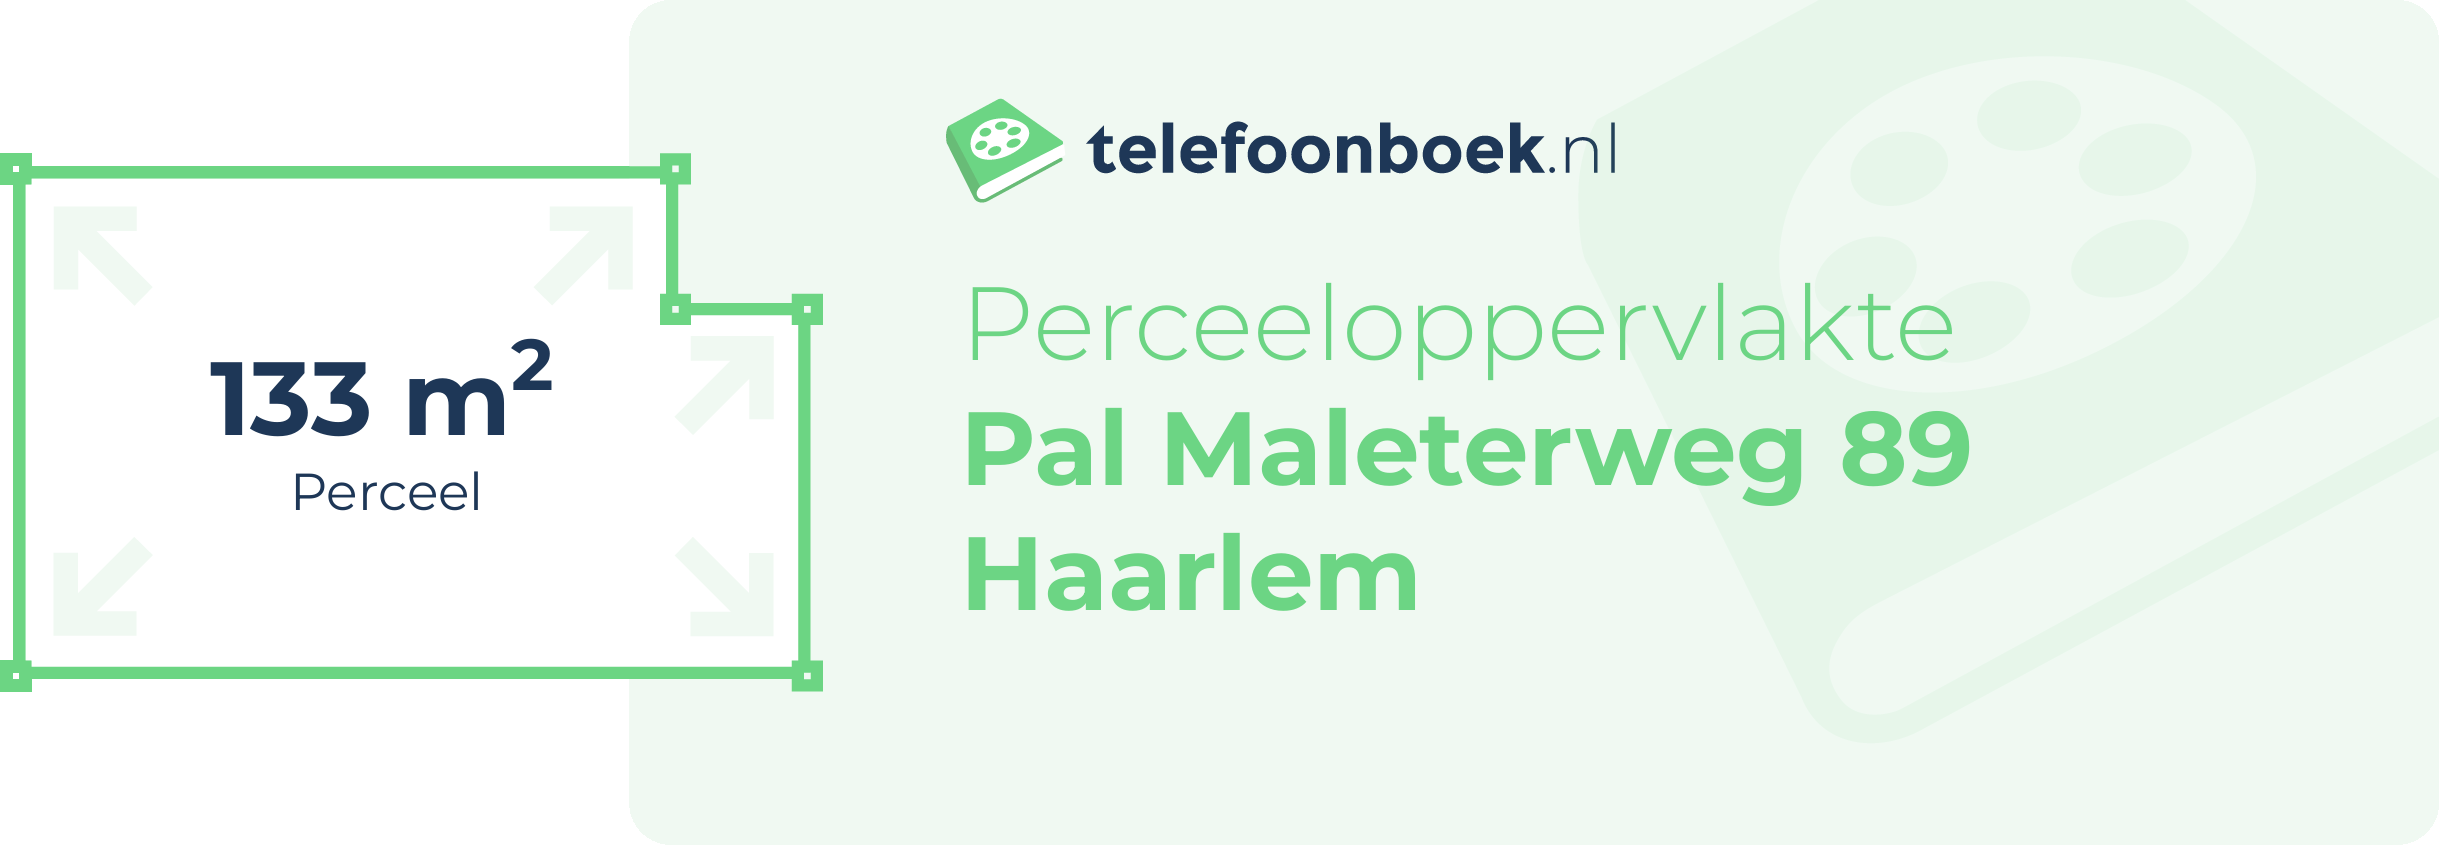 Perceeloppervlakte Pal Maleterweg 89 Haarlem